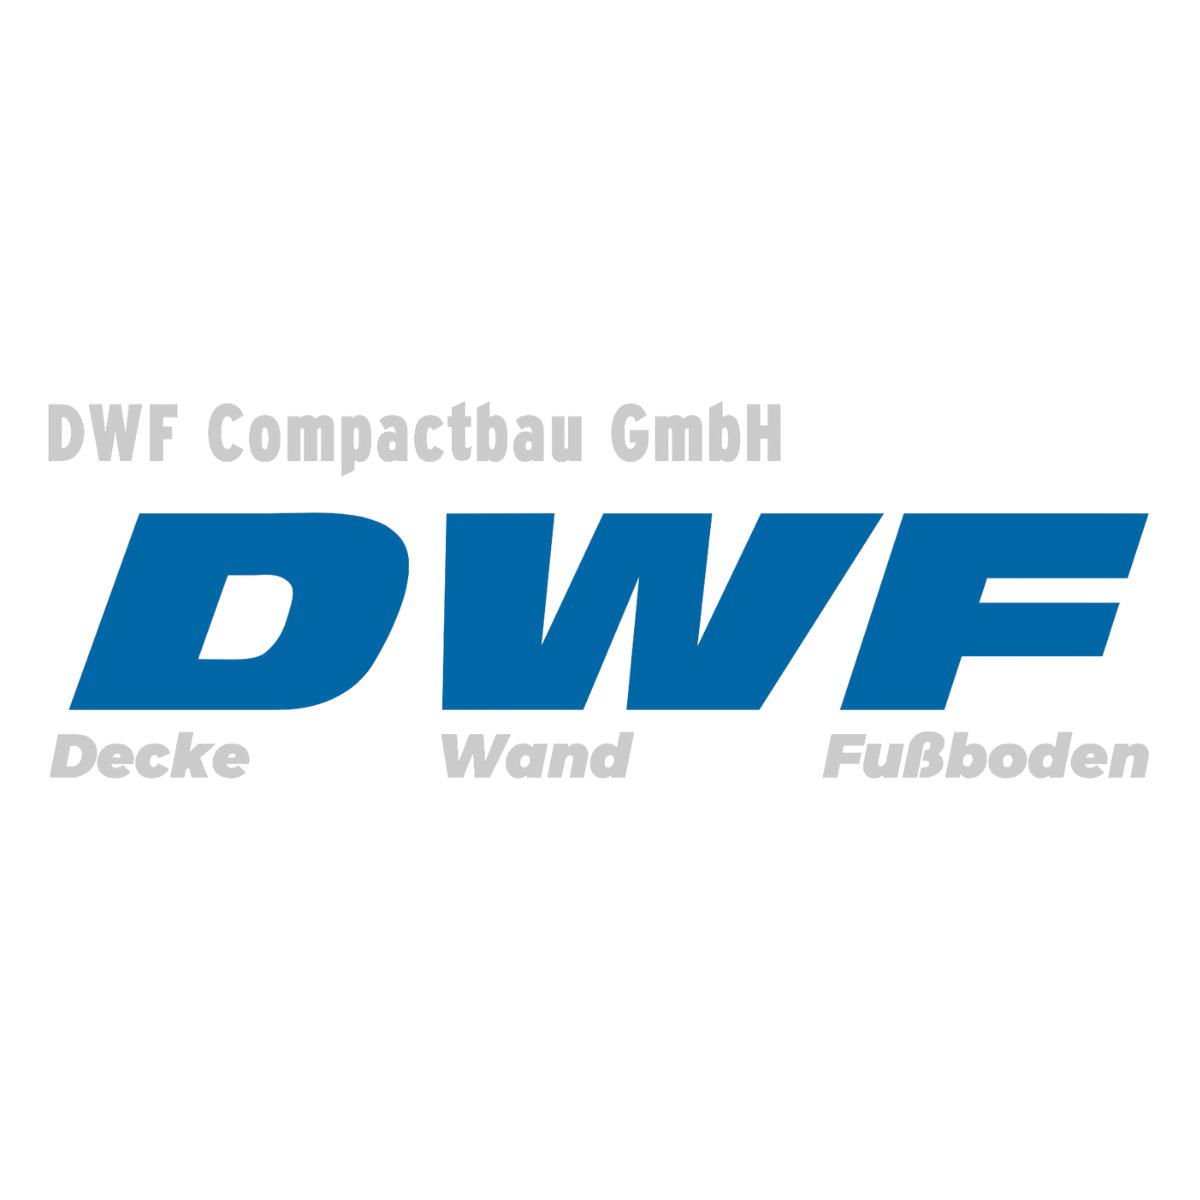 DWF Compactbau GmbH  